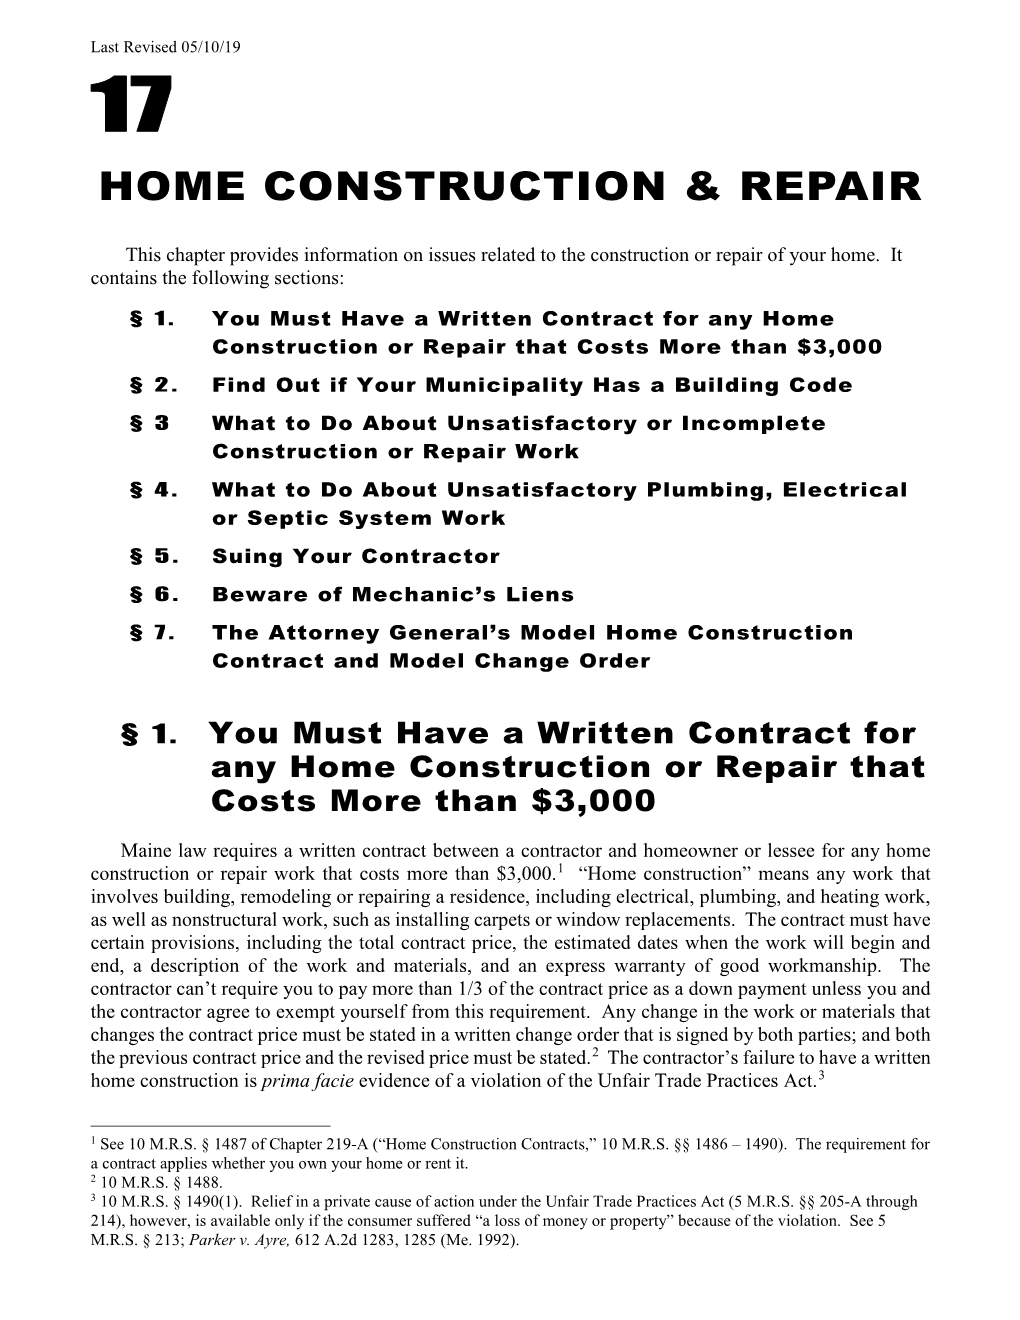 Home Construction & Repair